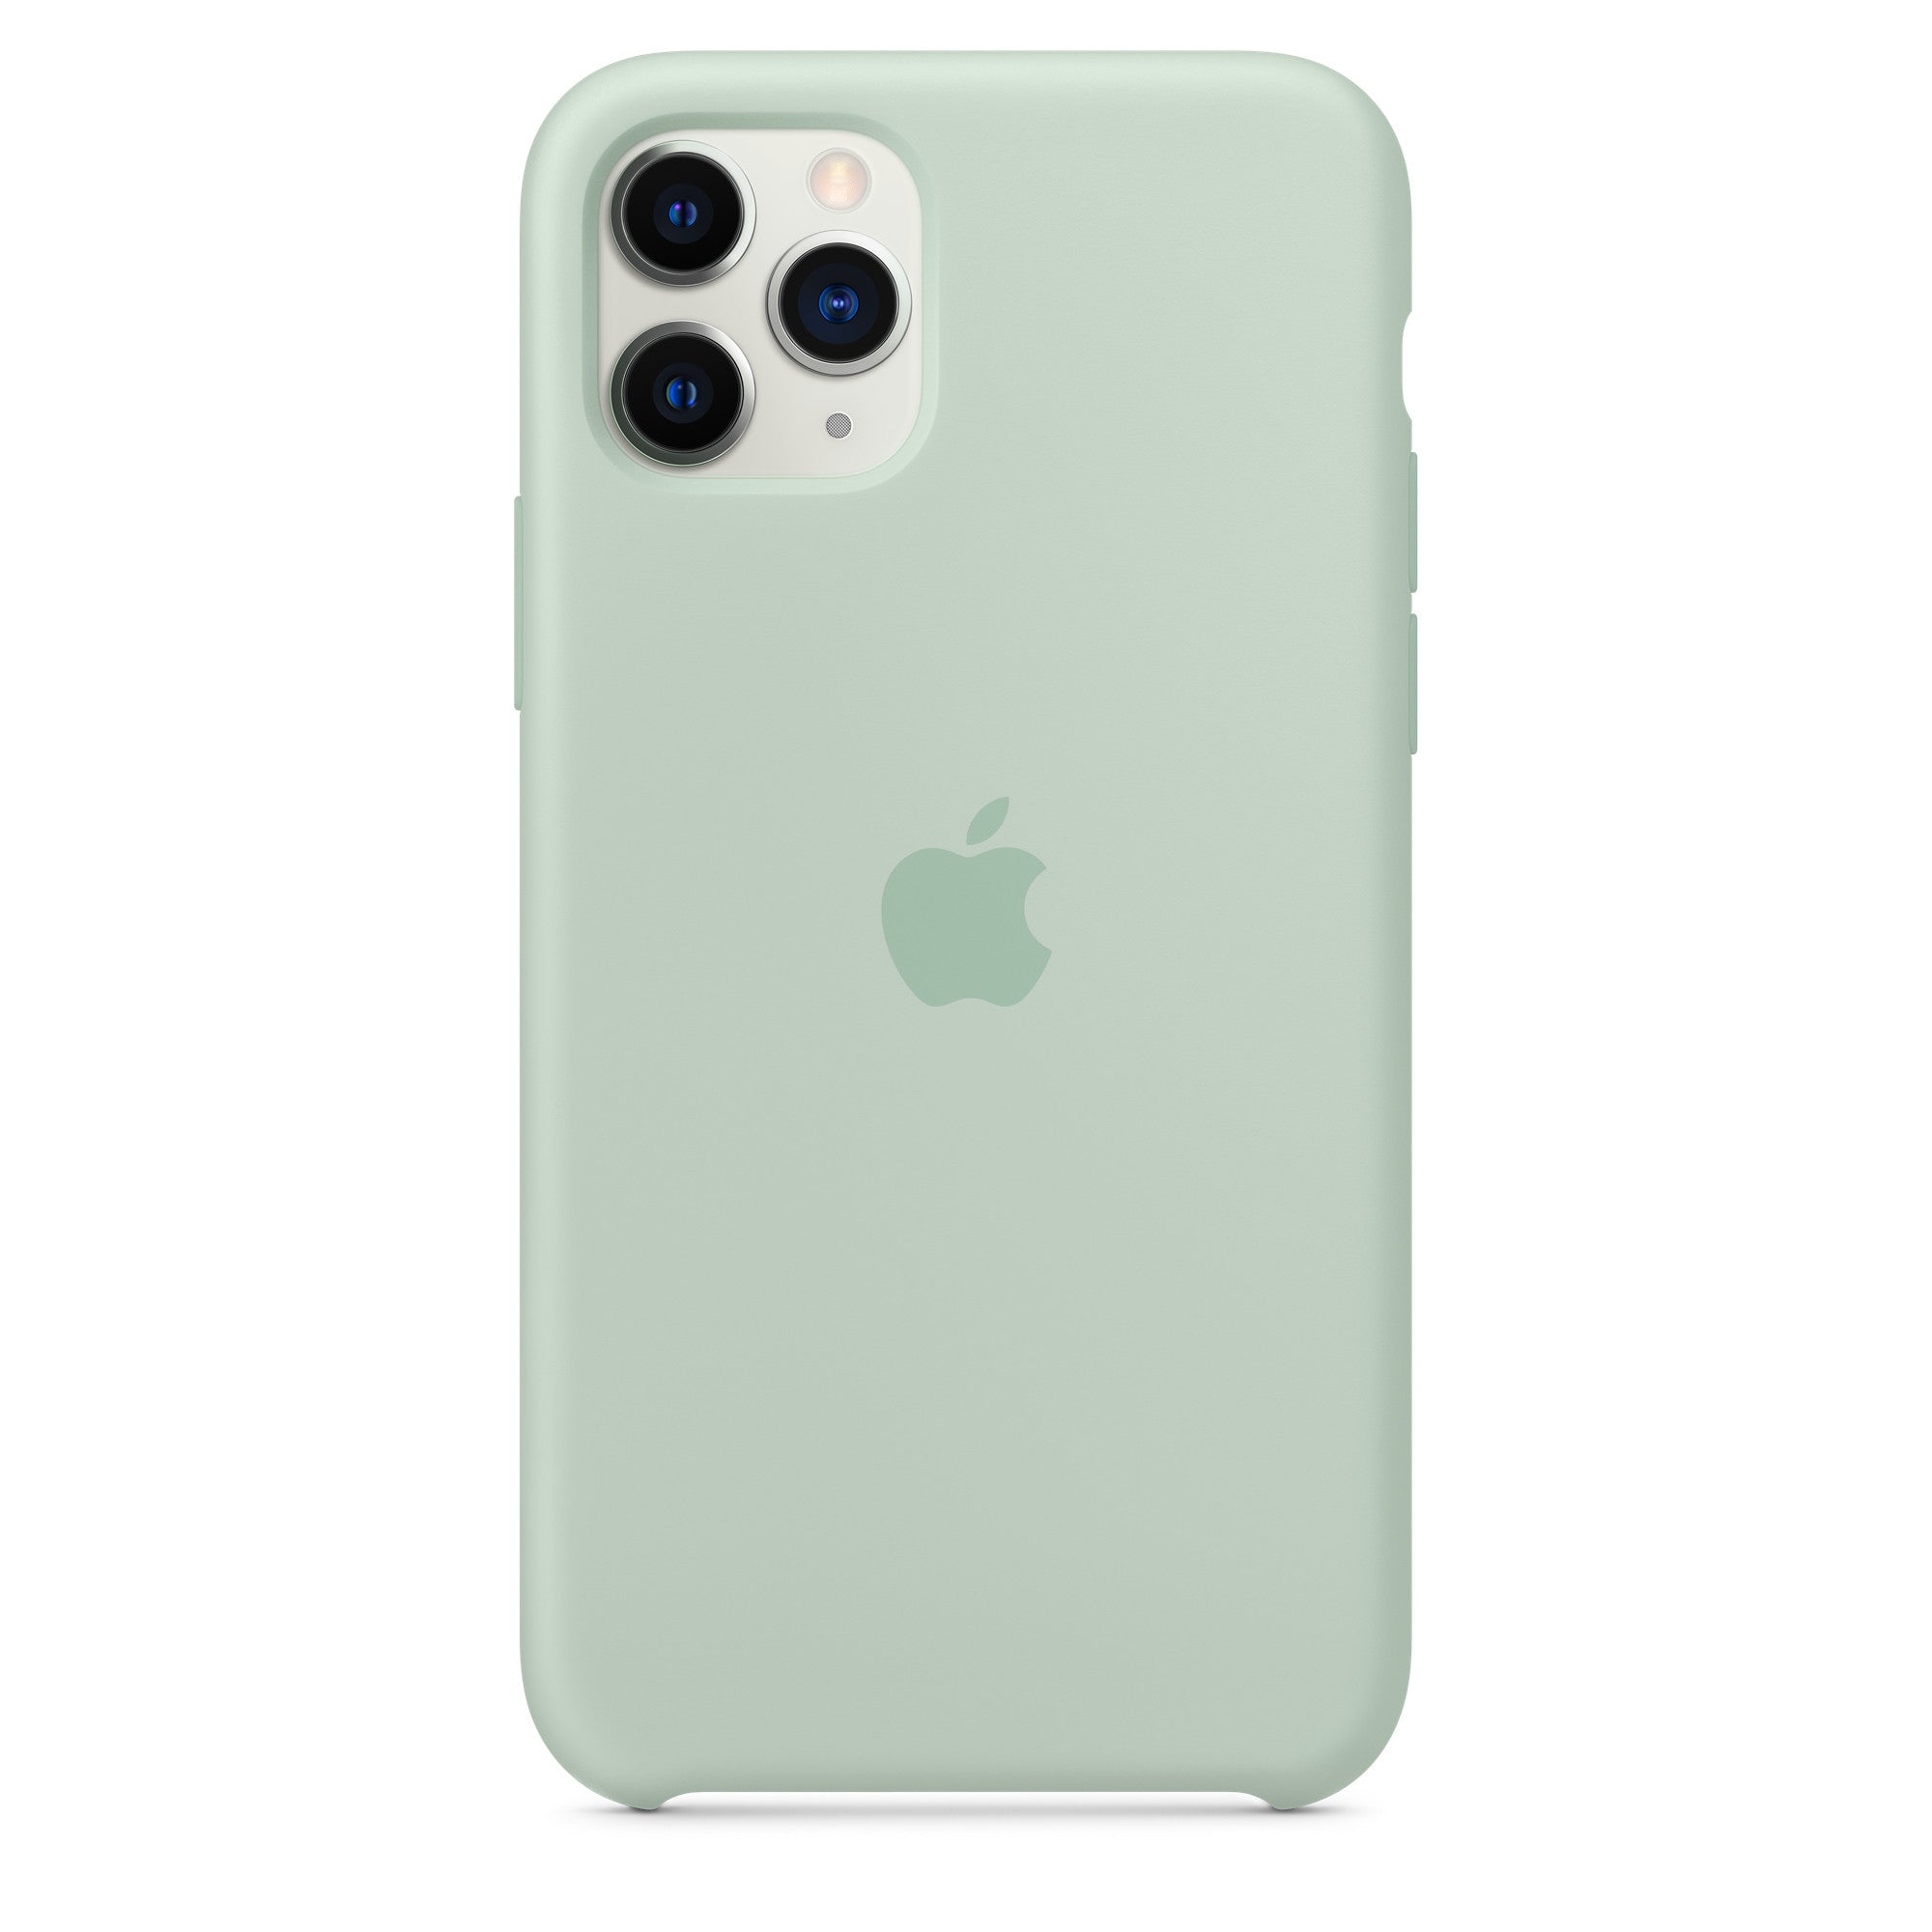 Apple iPhone 11 Pro Silicone Case - Beryl Beryl New - Sealed